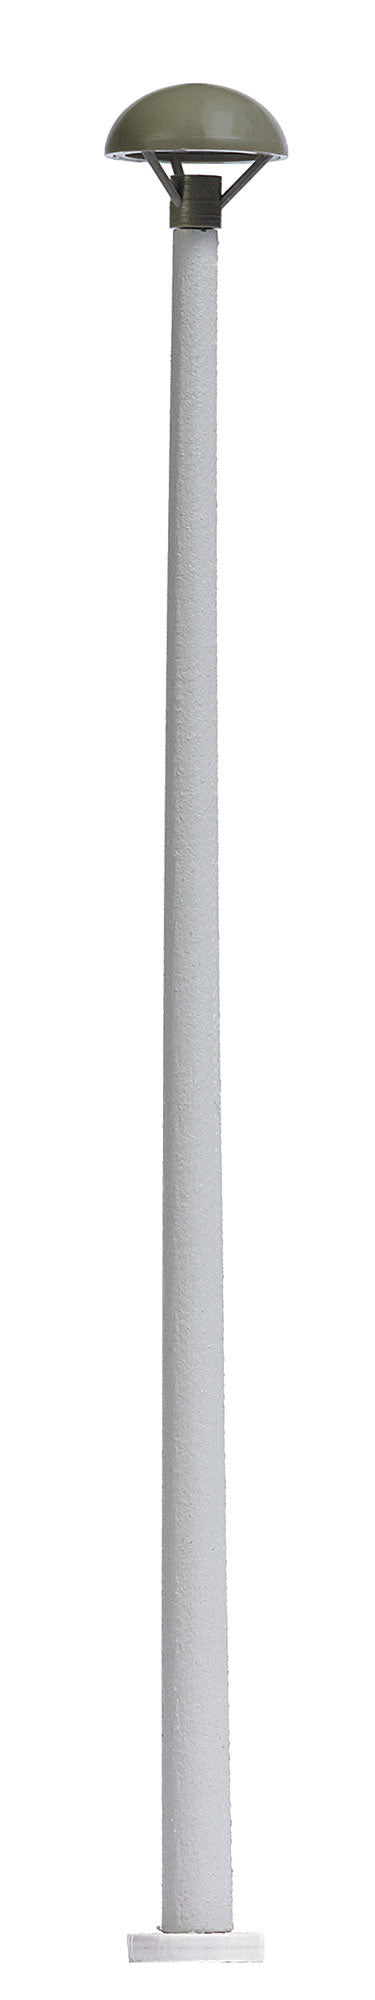 Busch 4113 HO Scale Mushroom-Top Platform Light with Concrete Mast -- Yellow Light, 4-3/16"  10.6cm Tall